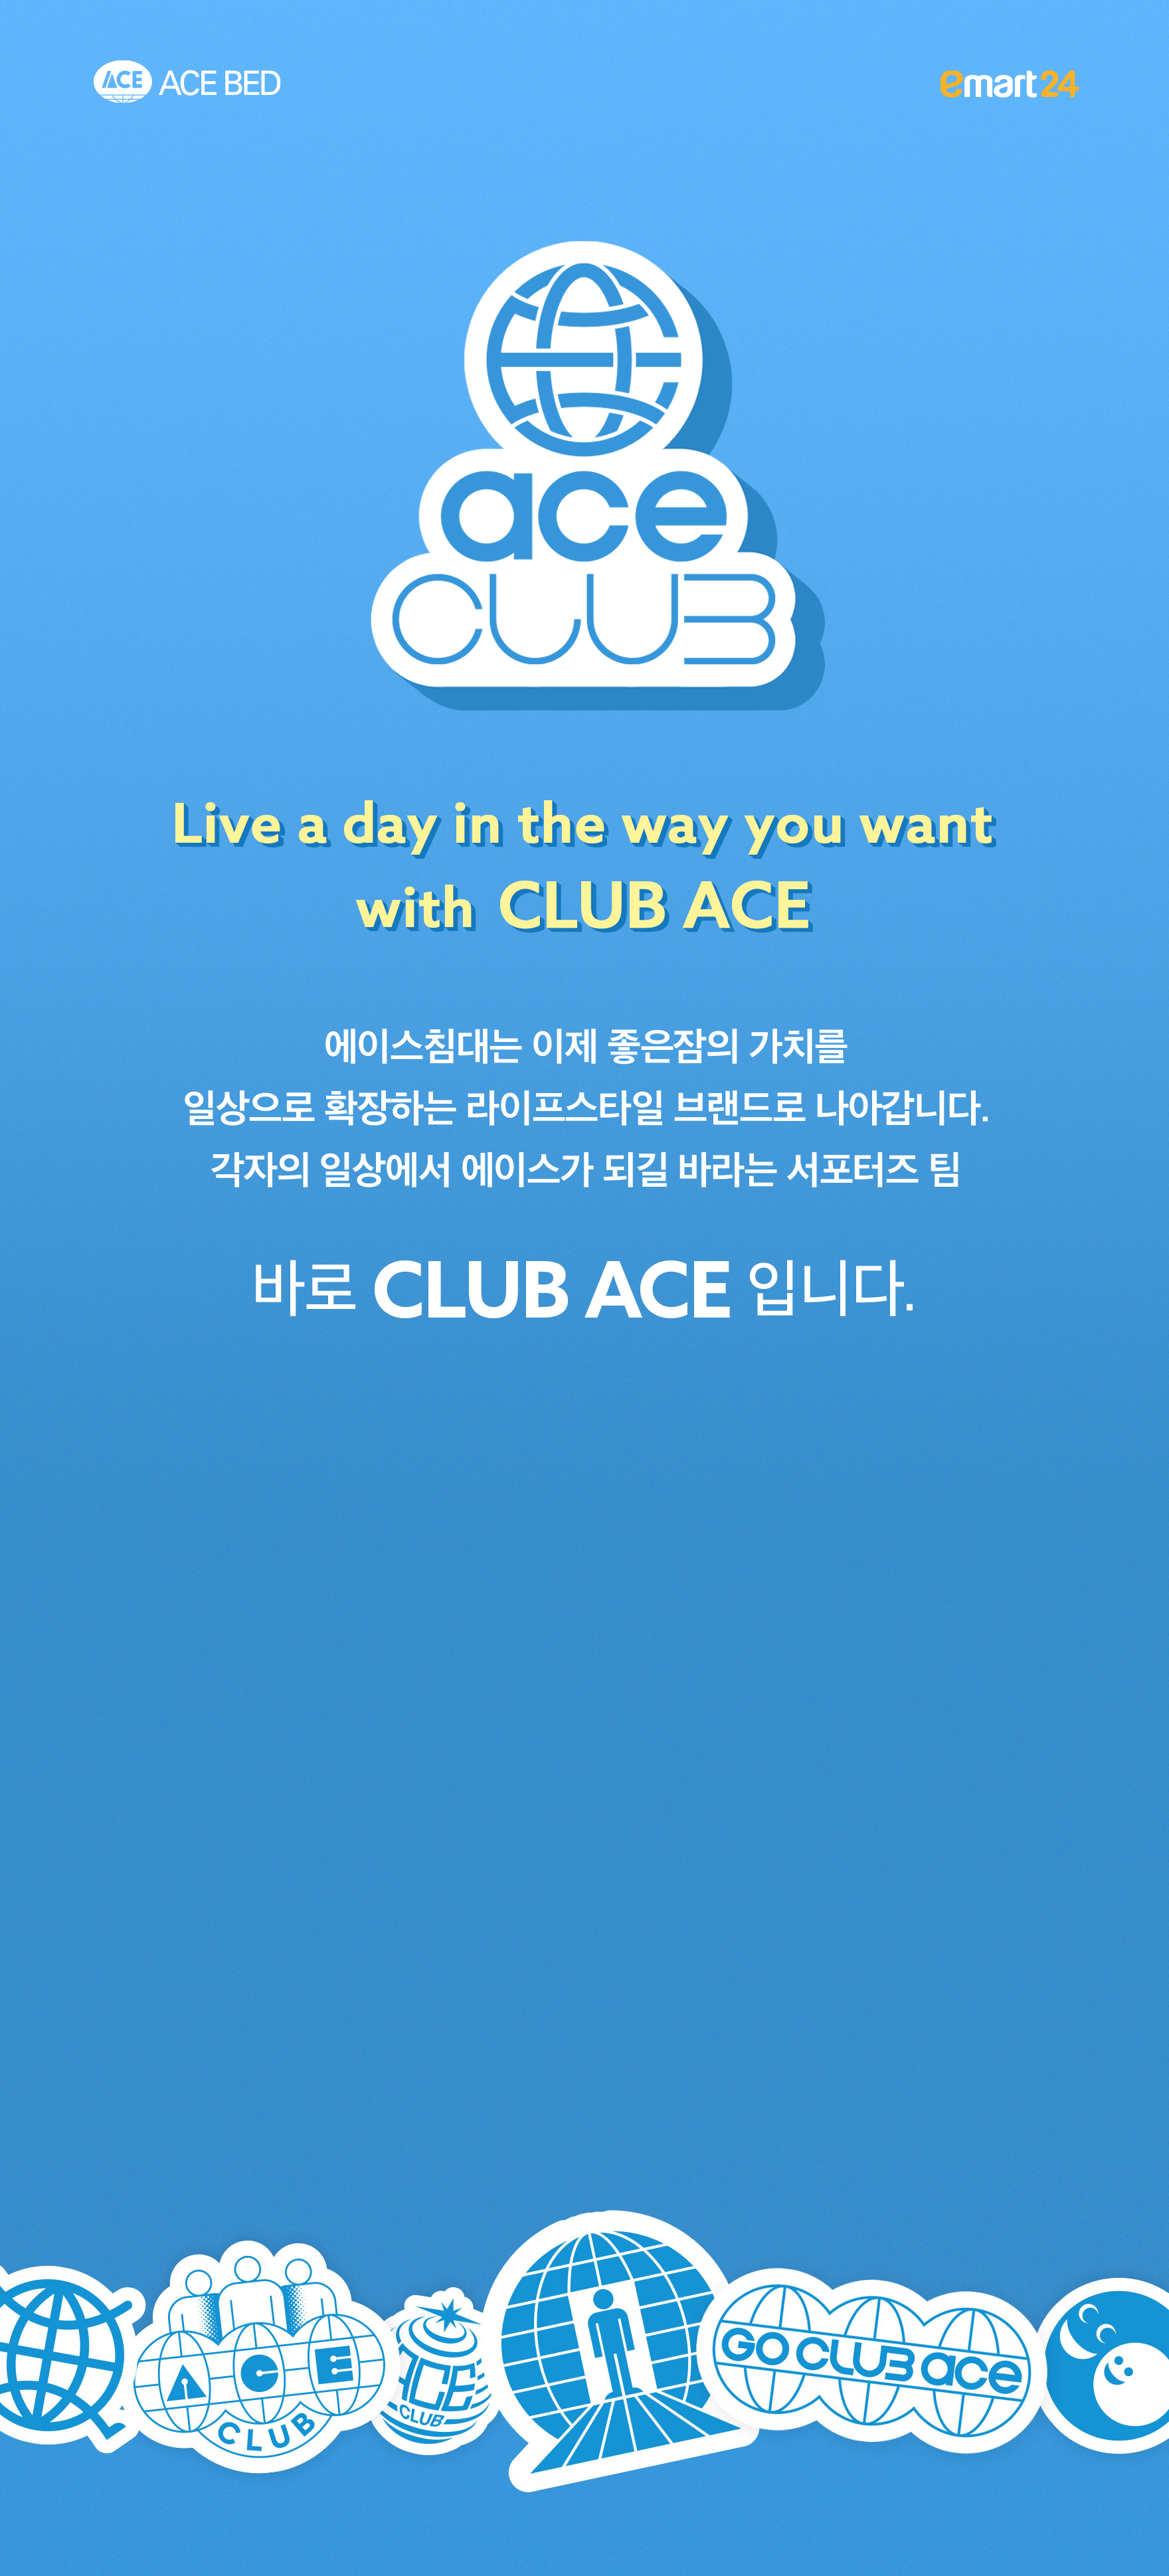 ACE BED emart24 | ace CLUB - Live a day in the way you want with CLUB ACE | 에이스침대는 이제 좋은잠의 가치를 일상으로 확장하는 라이프스타일 브랜드로 나아갑니다. 각자의 일상에서 에이스가 되길 바라는 서포터즈 팀 바로 CLUB ACE입니다.